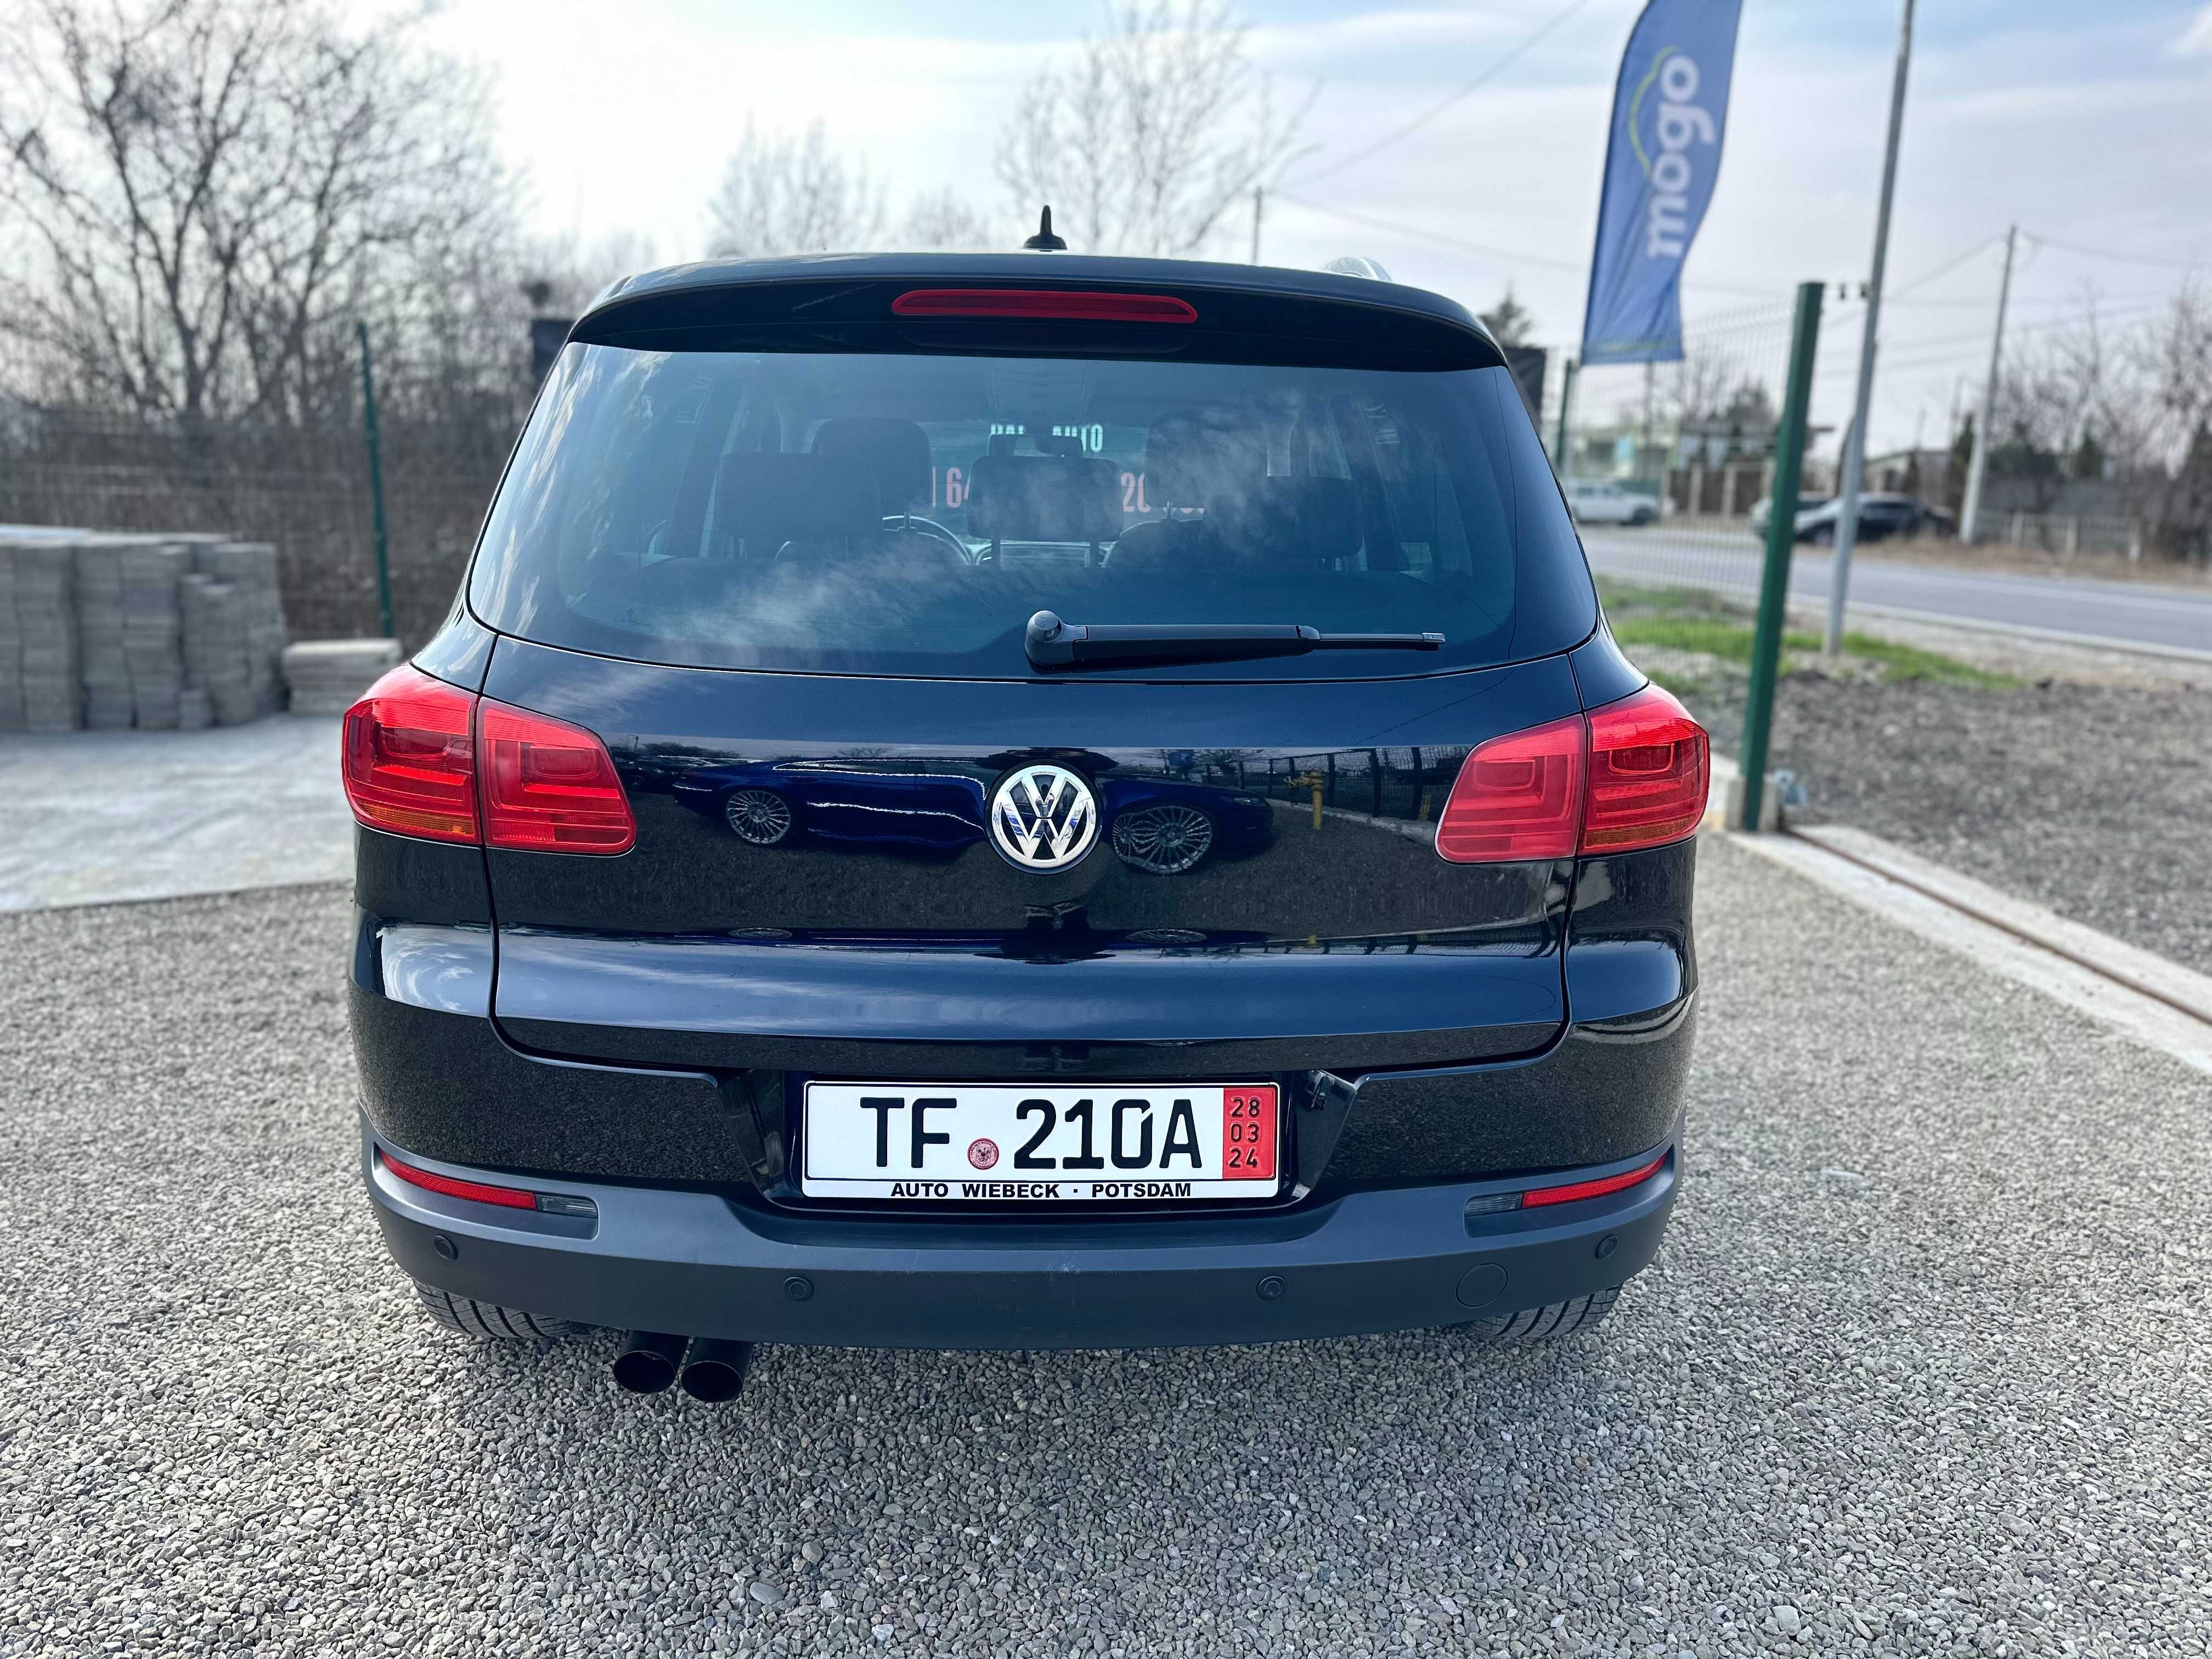 VW Tiguan - 4x4 - 2.0 benzină - Rate fara Avans